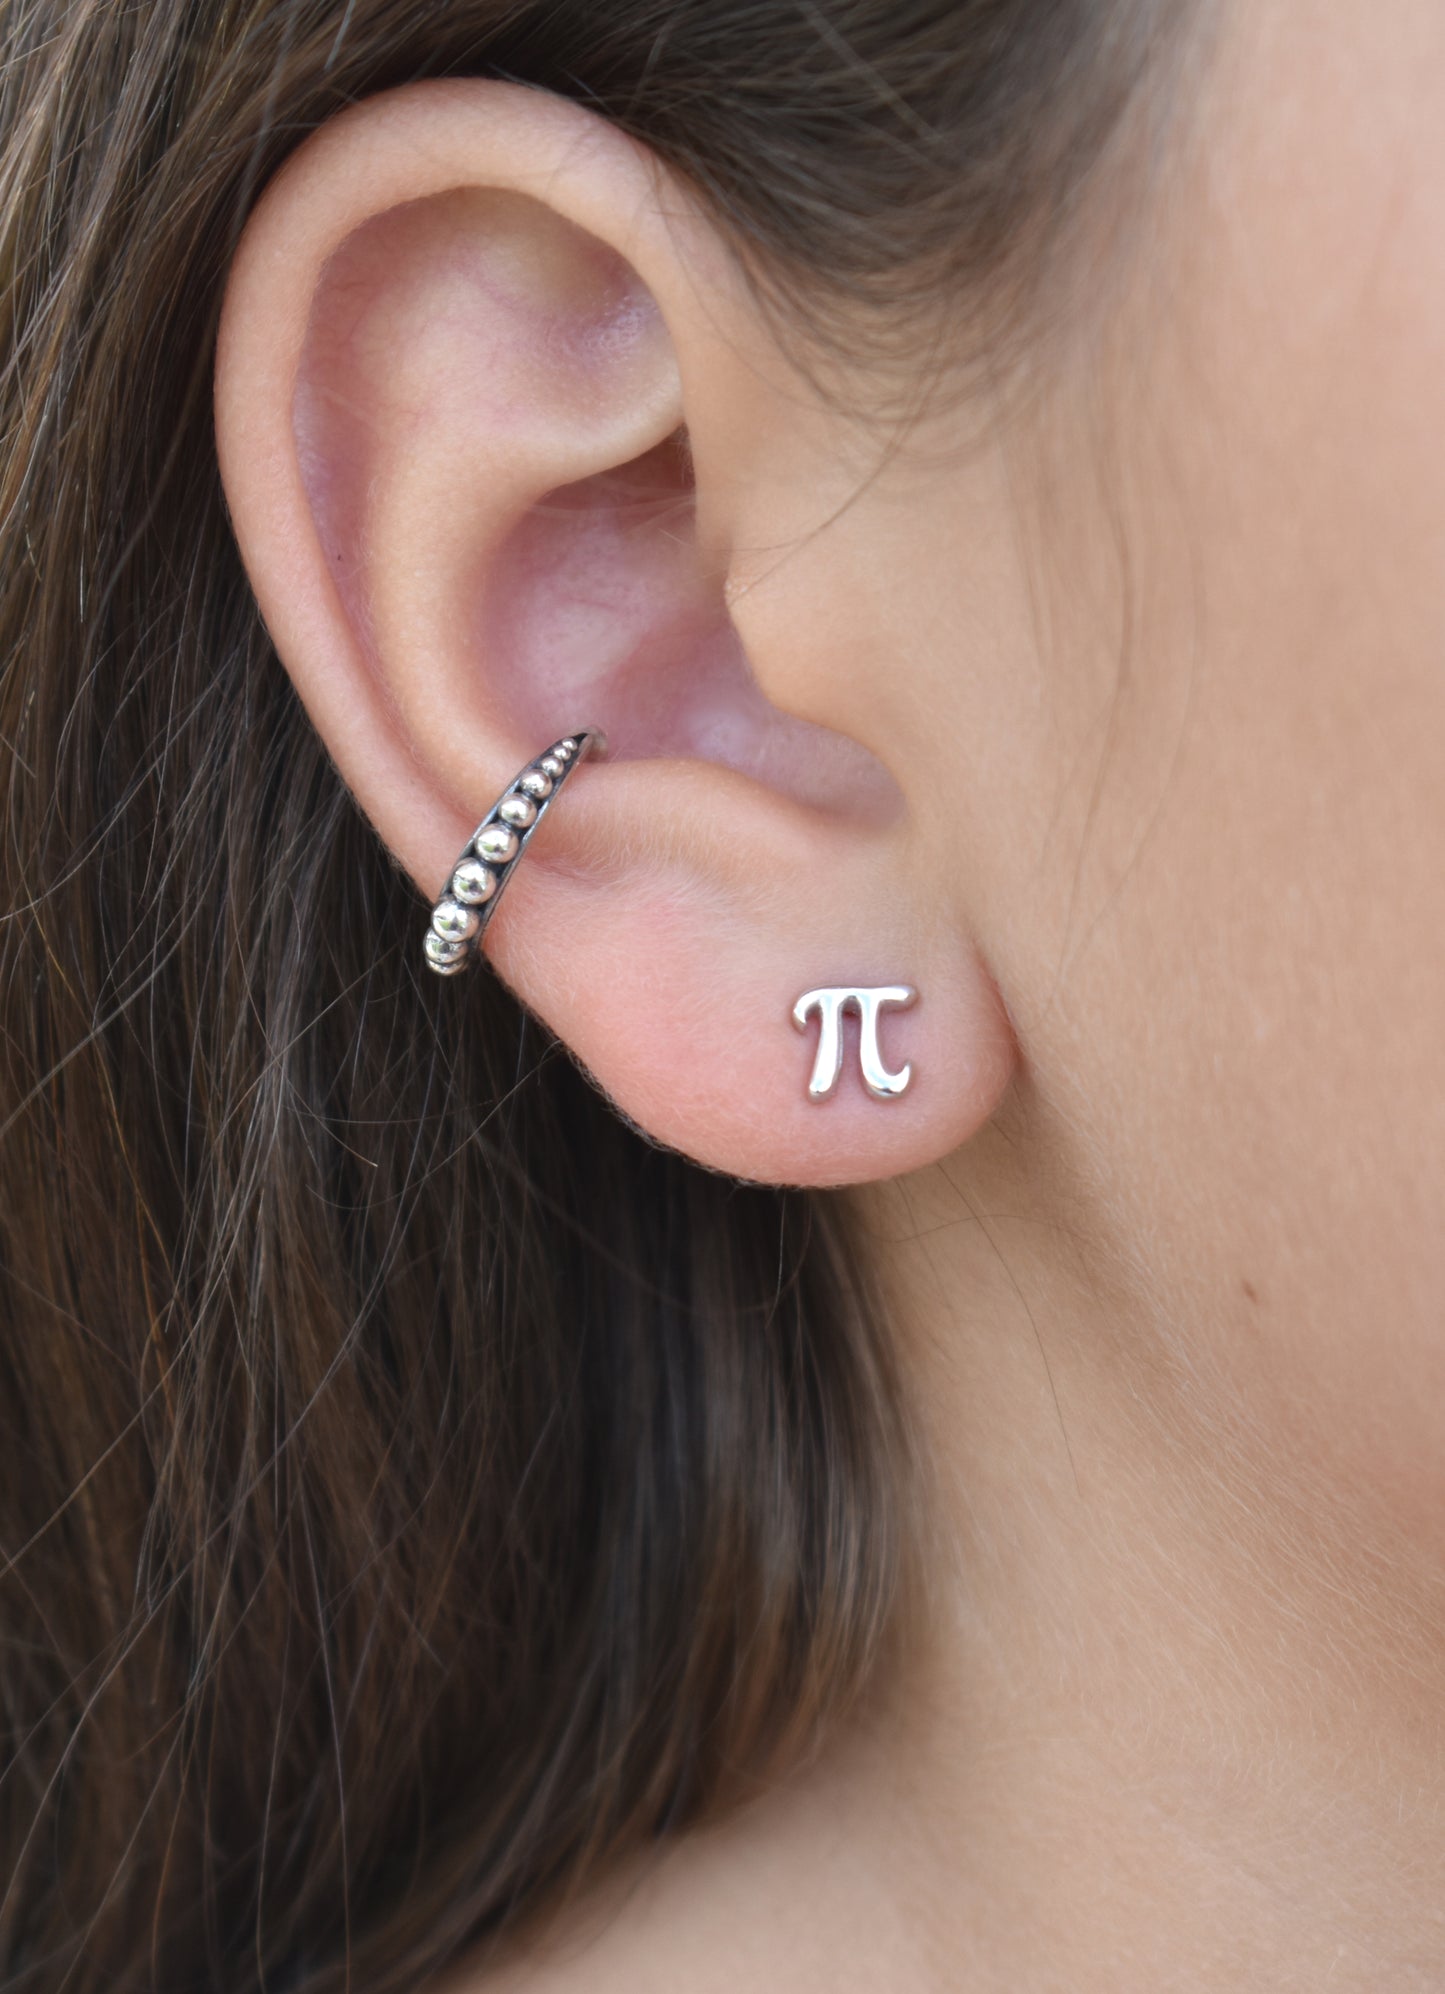 Pi Stud Earrings-Math Gifts, Pi Day-Sterling Silver earrings